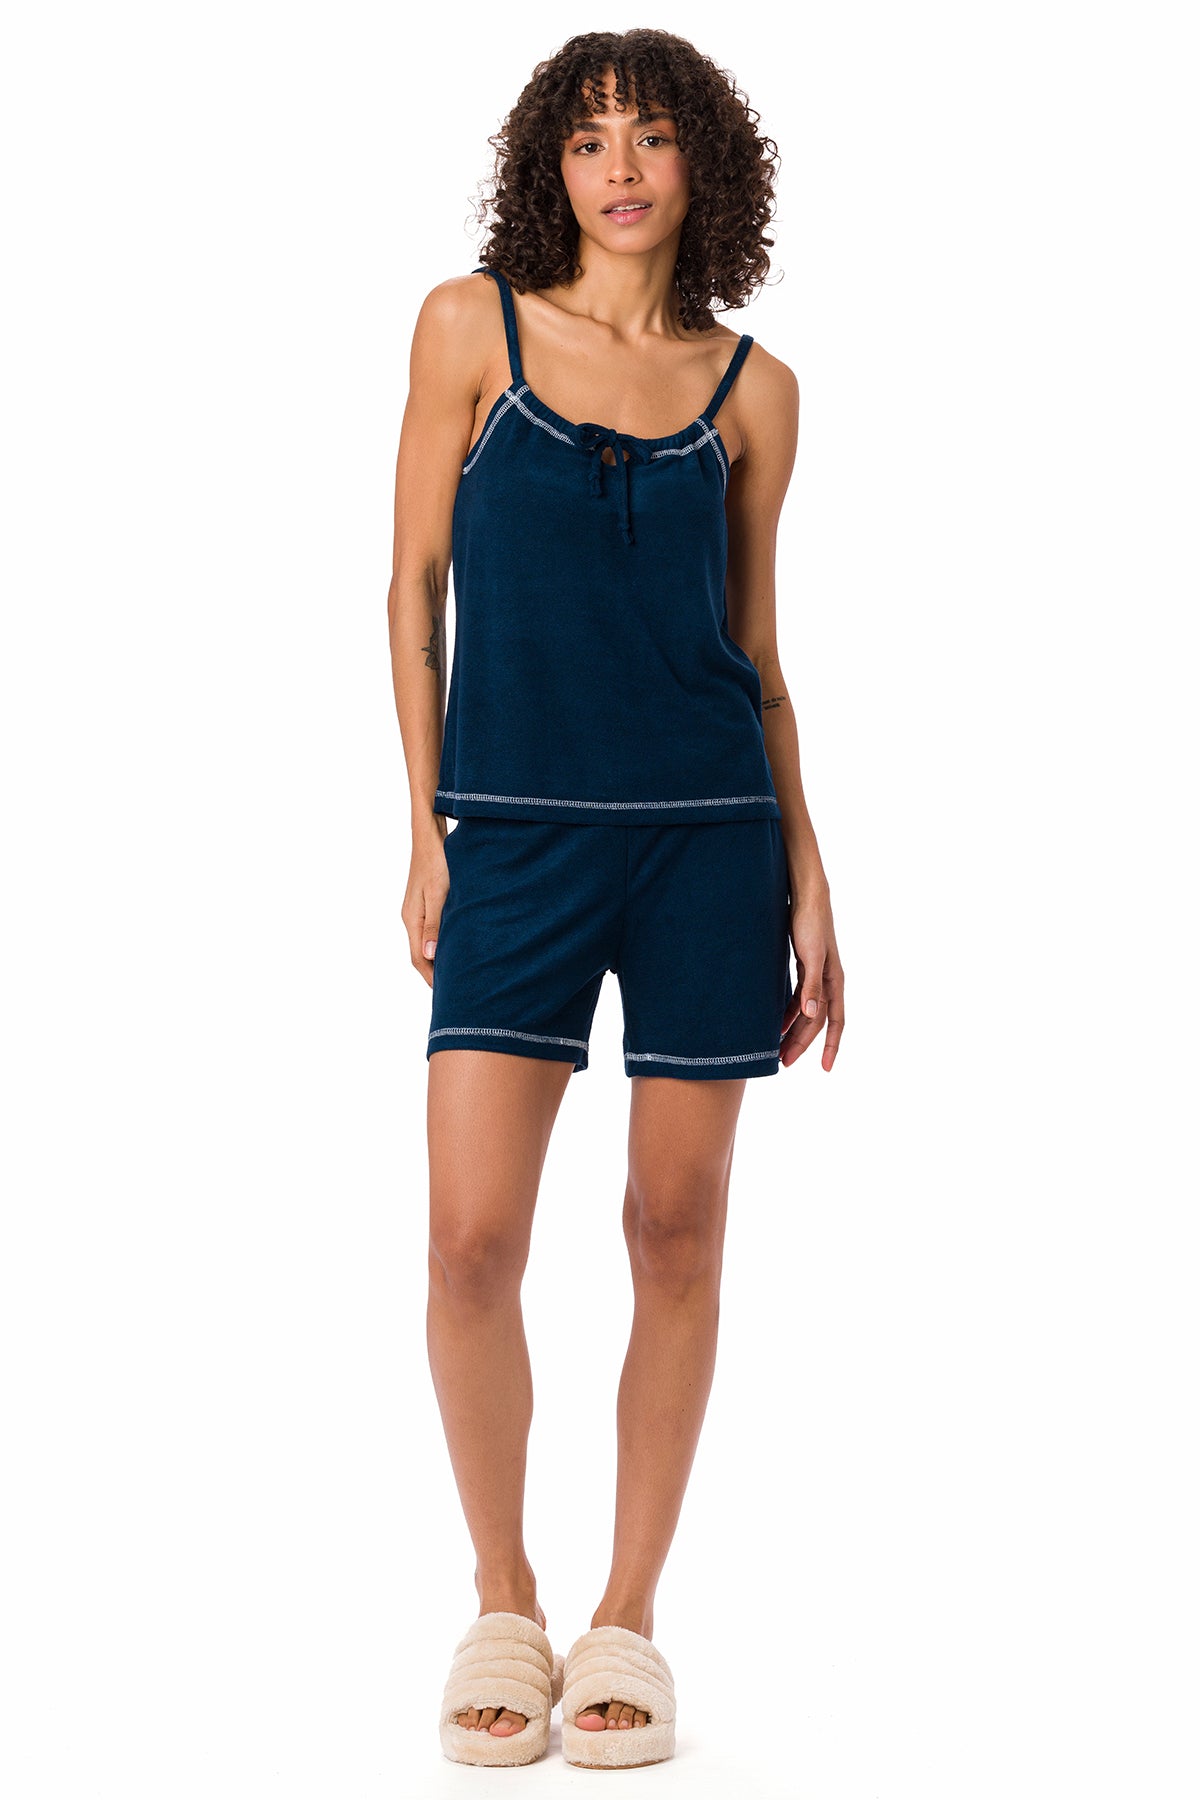 Suvi NYC women's 2-piece short and tank top pajama set . Terry Cotton